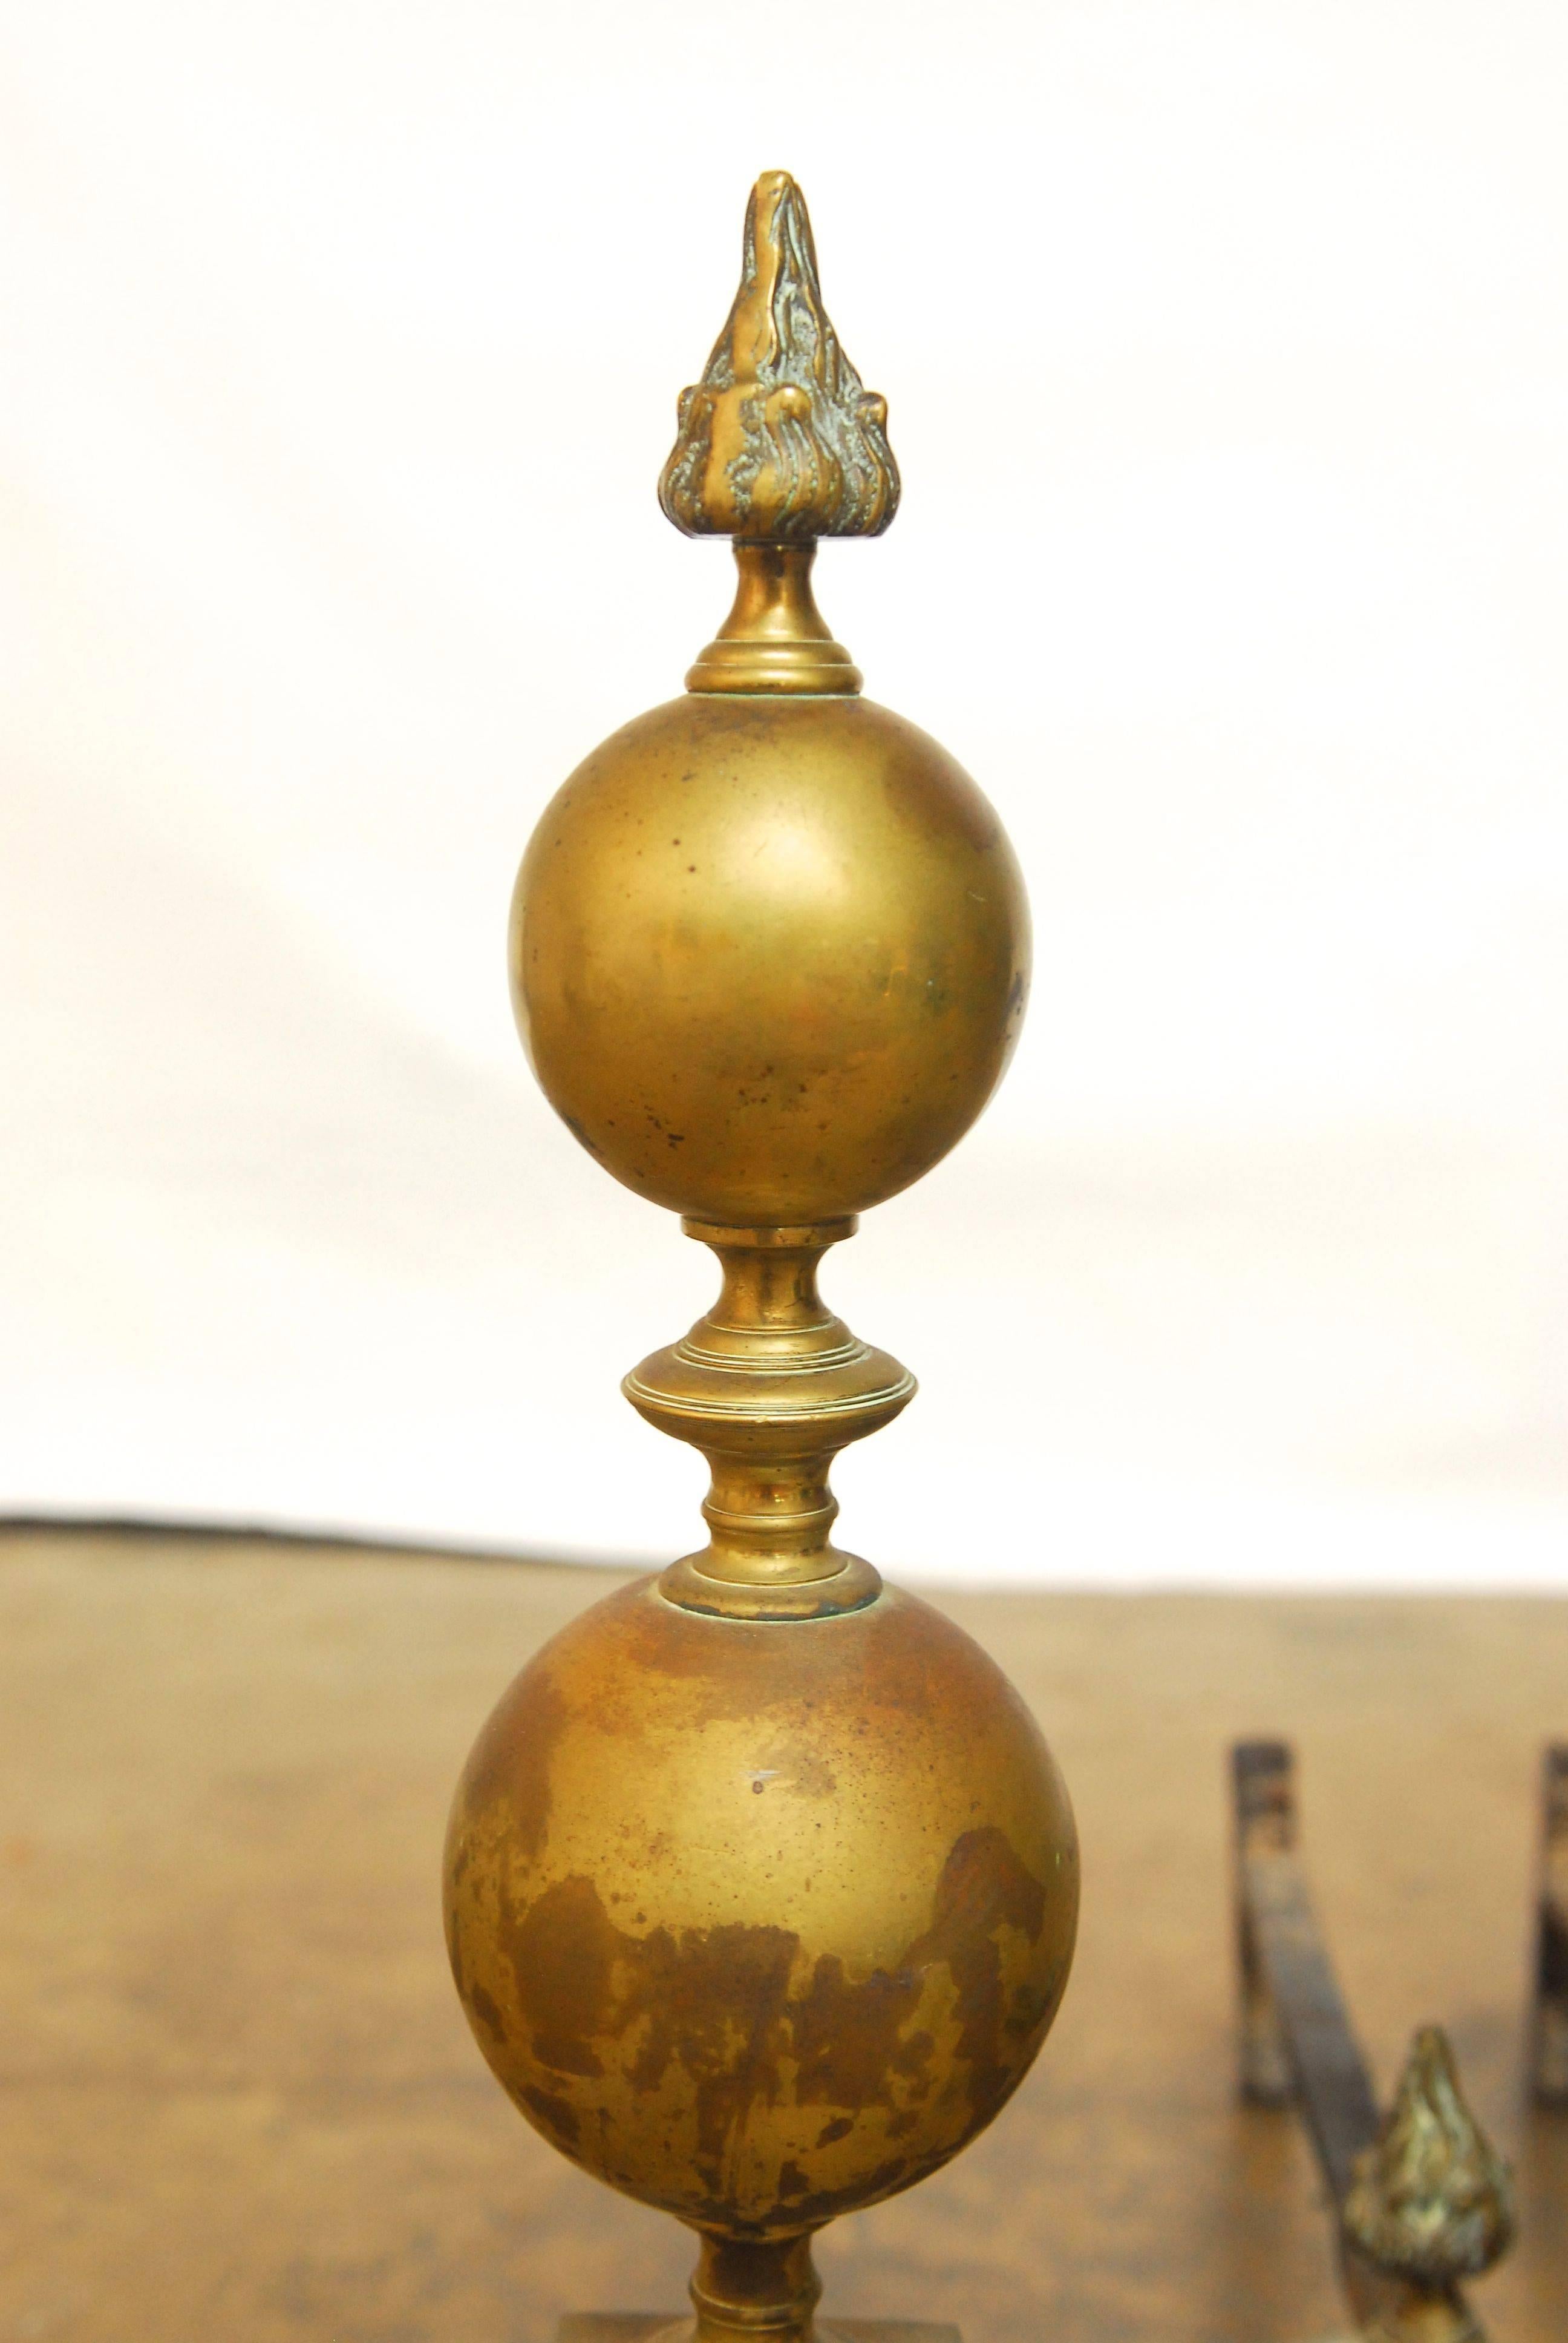 19th Century Pair of Monumental English Brass Andirons